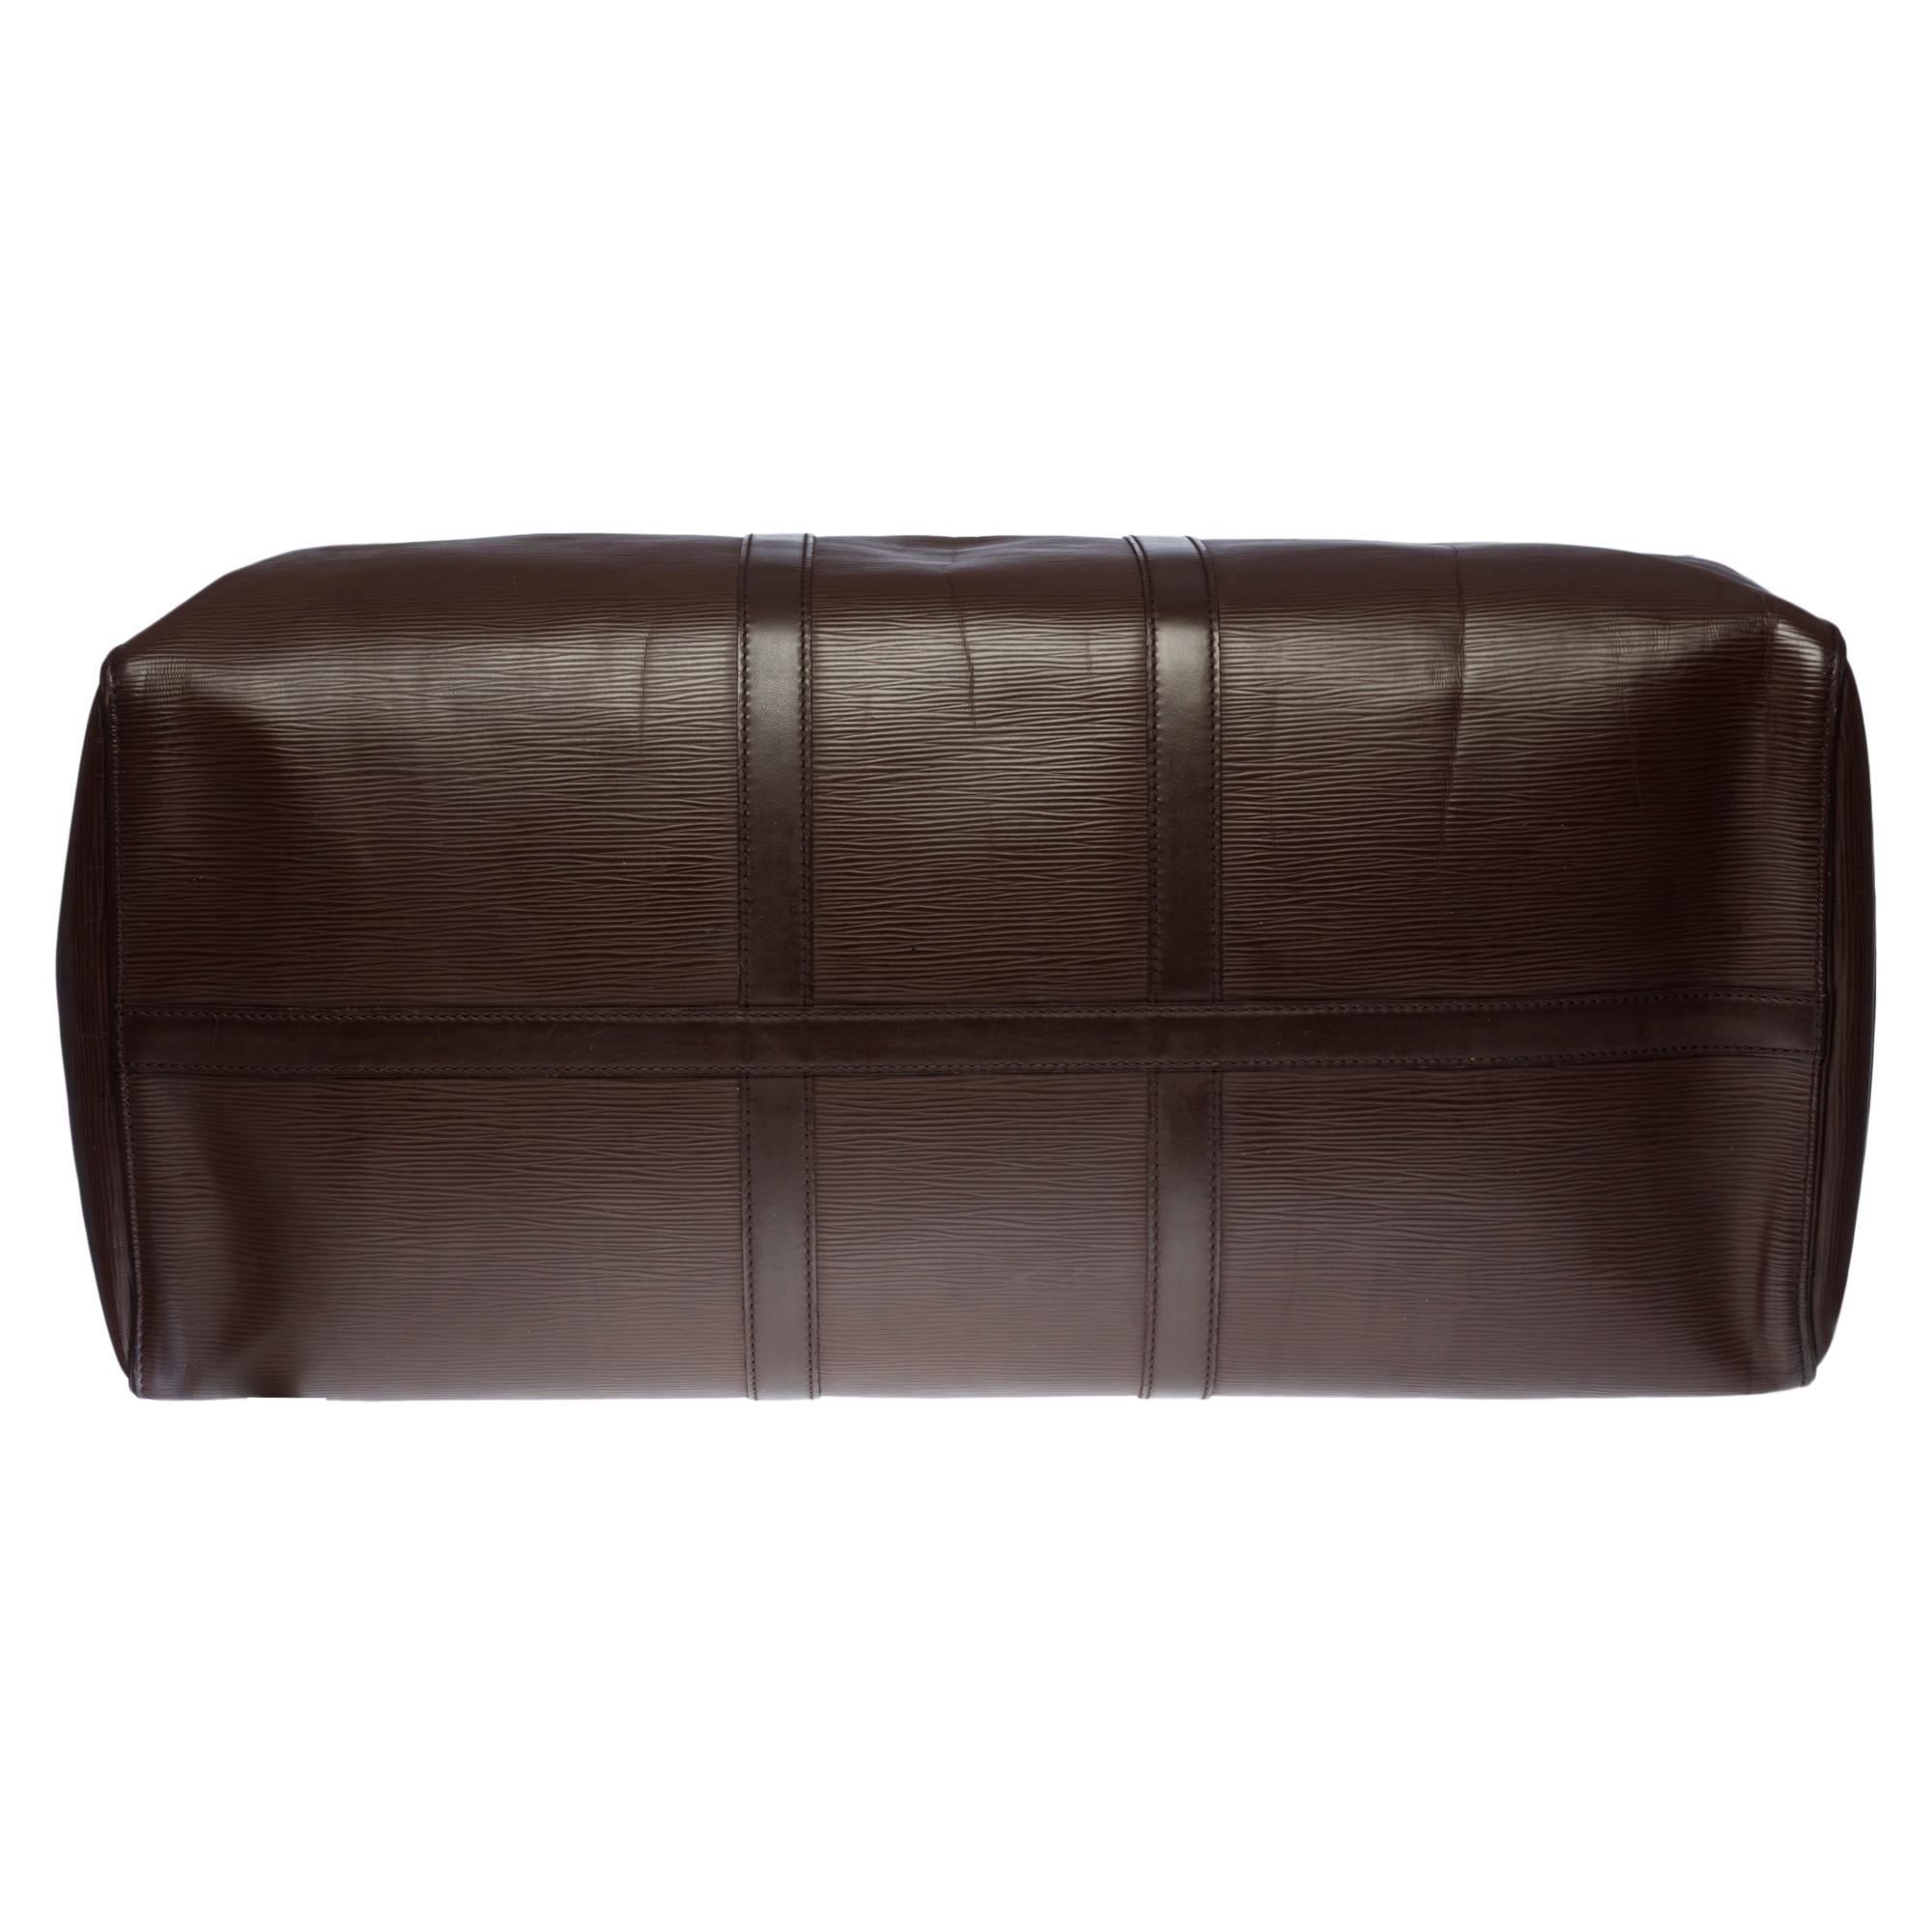 Louis Vuitton Keepall 55 Travel bag in Brown épi leather, matte SHW 4